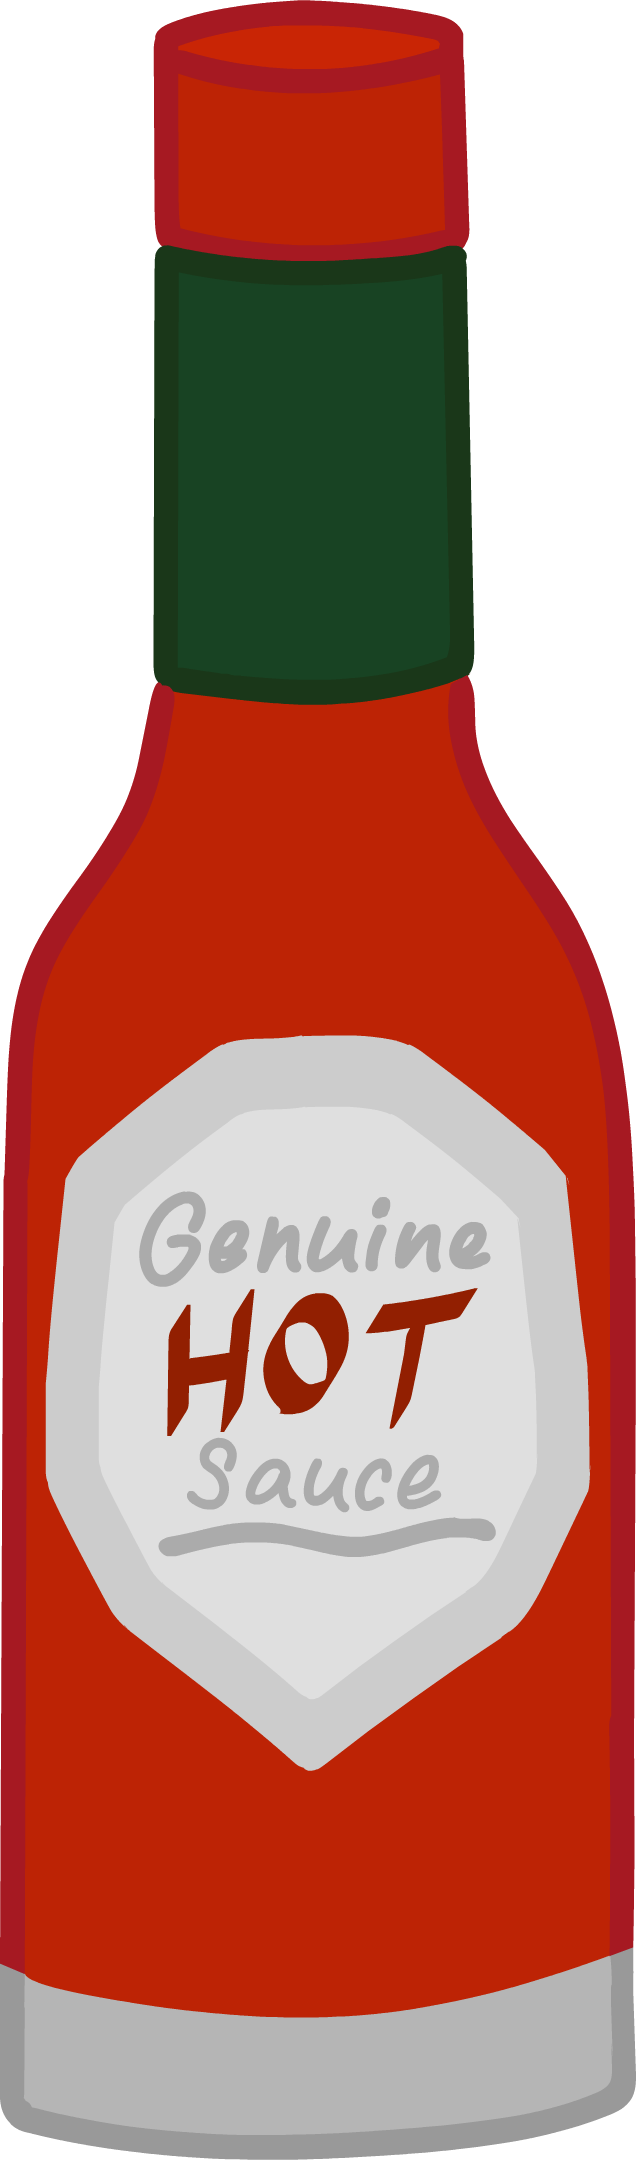 Sauce Bottle PNG